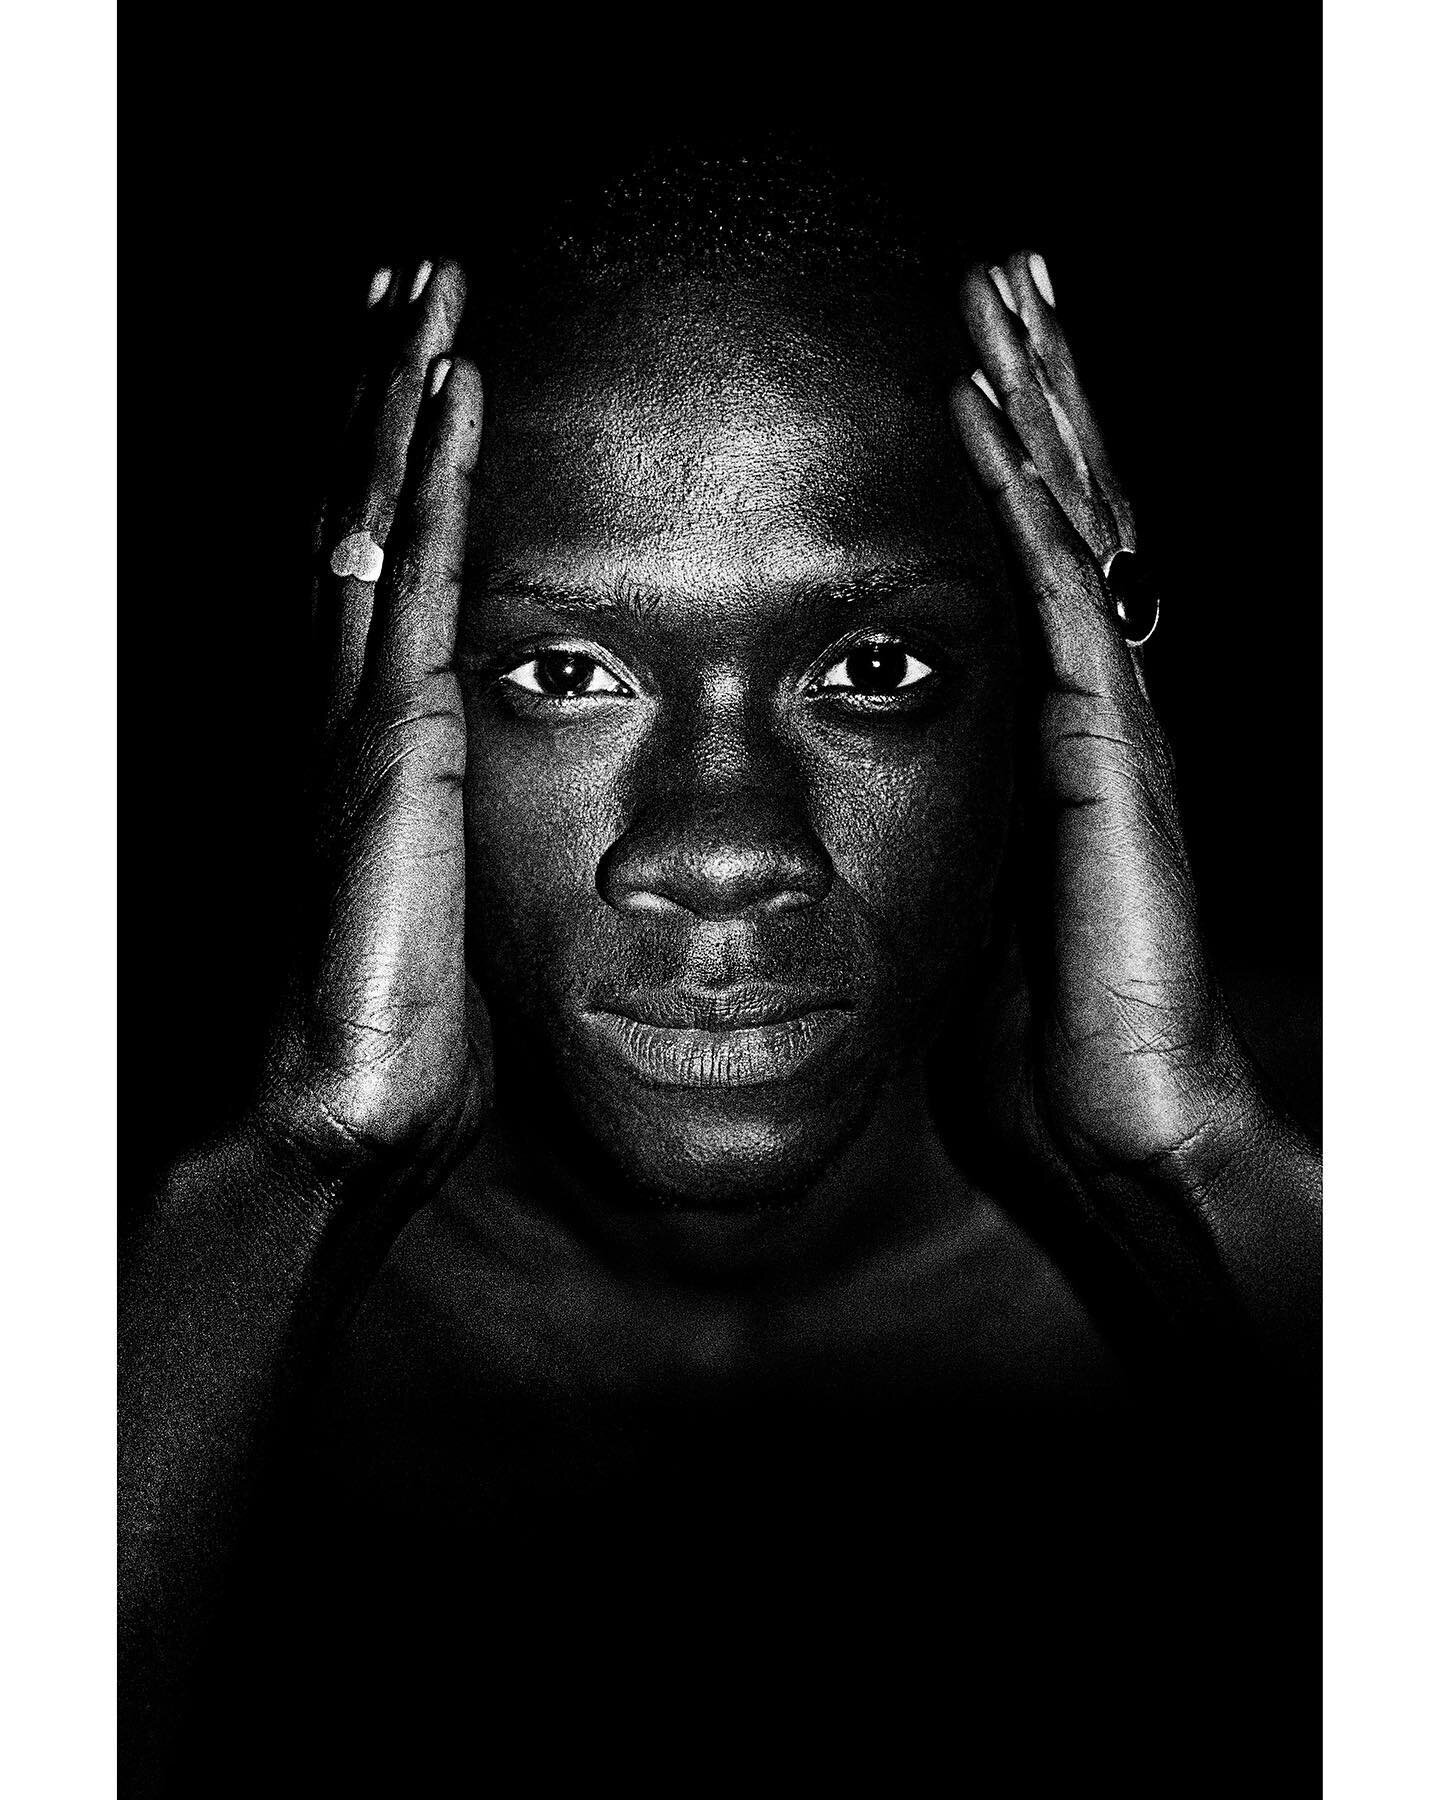 Kader, Dakar
From my Book NUYU
Pigmentprint on Hahnem&uuml;hle Photo Rag Baryta, 67x100 cm

#saschakraus 
#PhotoBook
#dakar
#senegal

#bffde #derbff #fineartphotography
#filmphotography #filmisnotdead 
#blackandwhite #filmphotography
#istillshootfilm